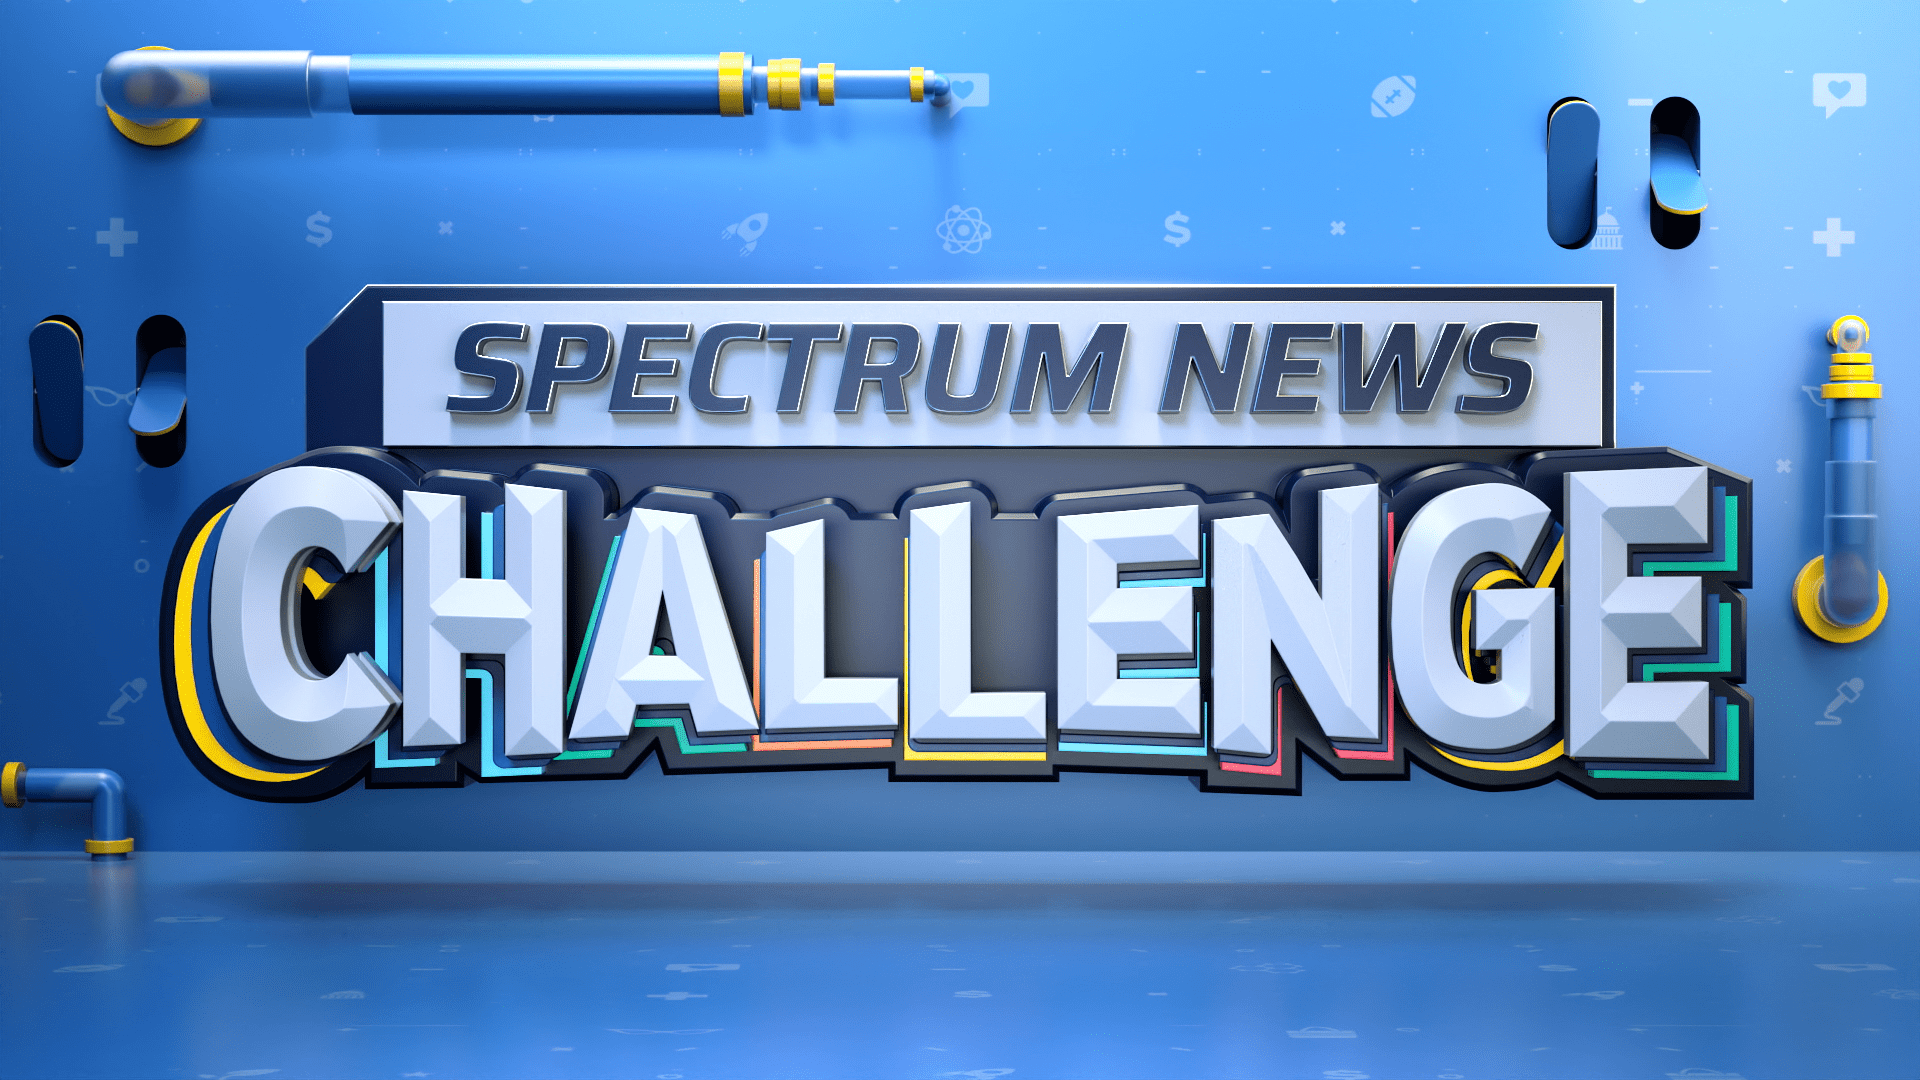 Spectrum News Challenge!